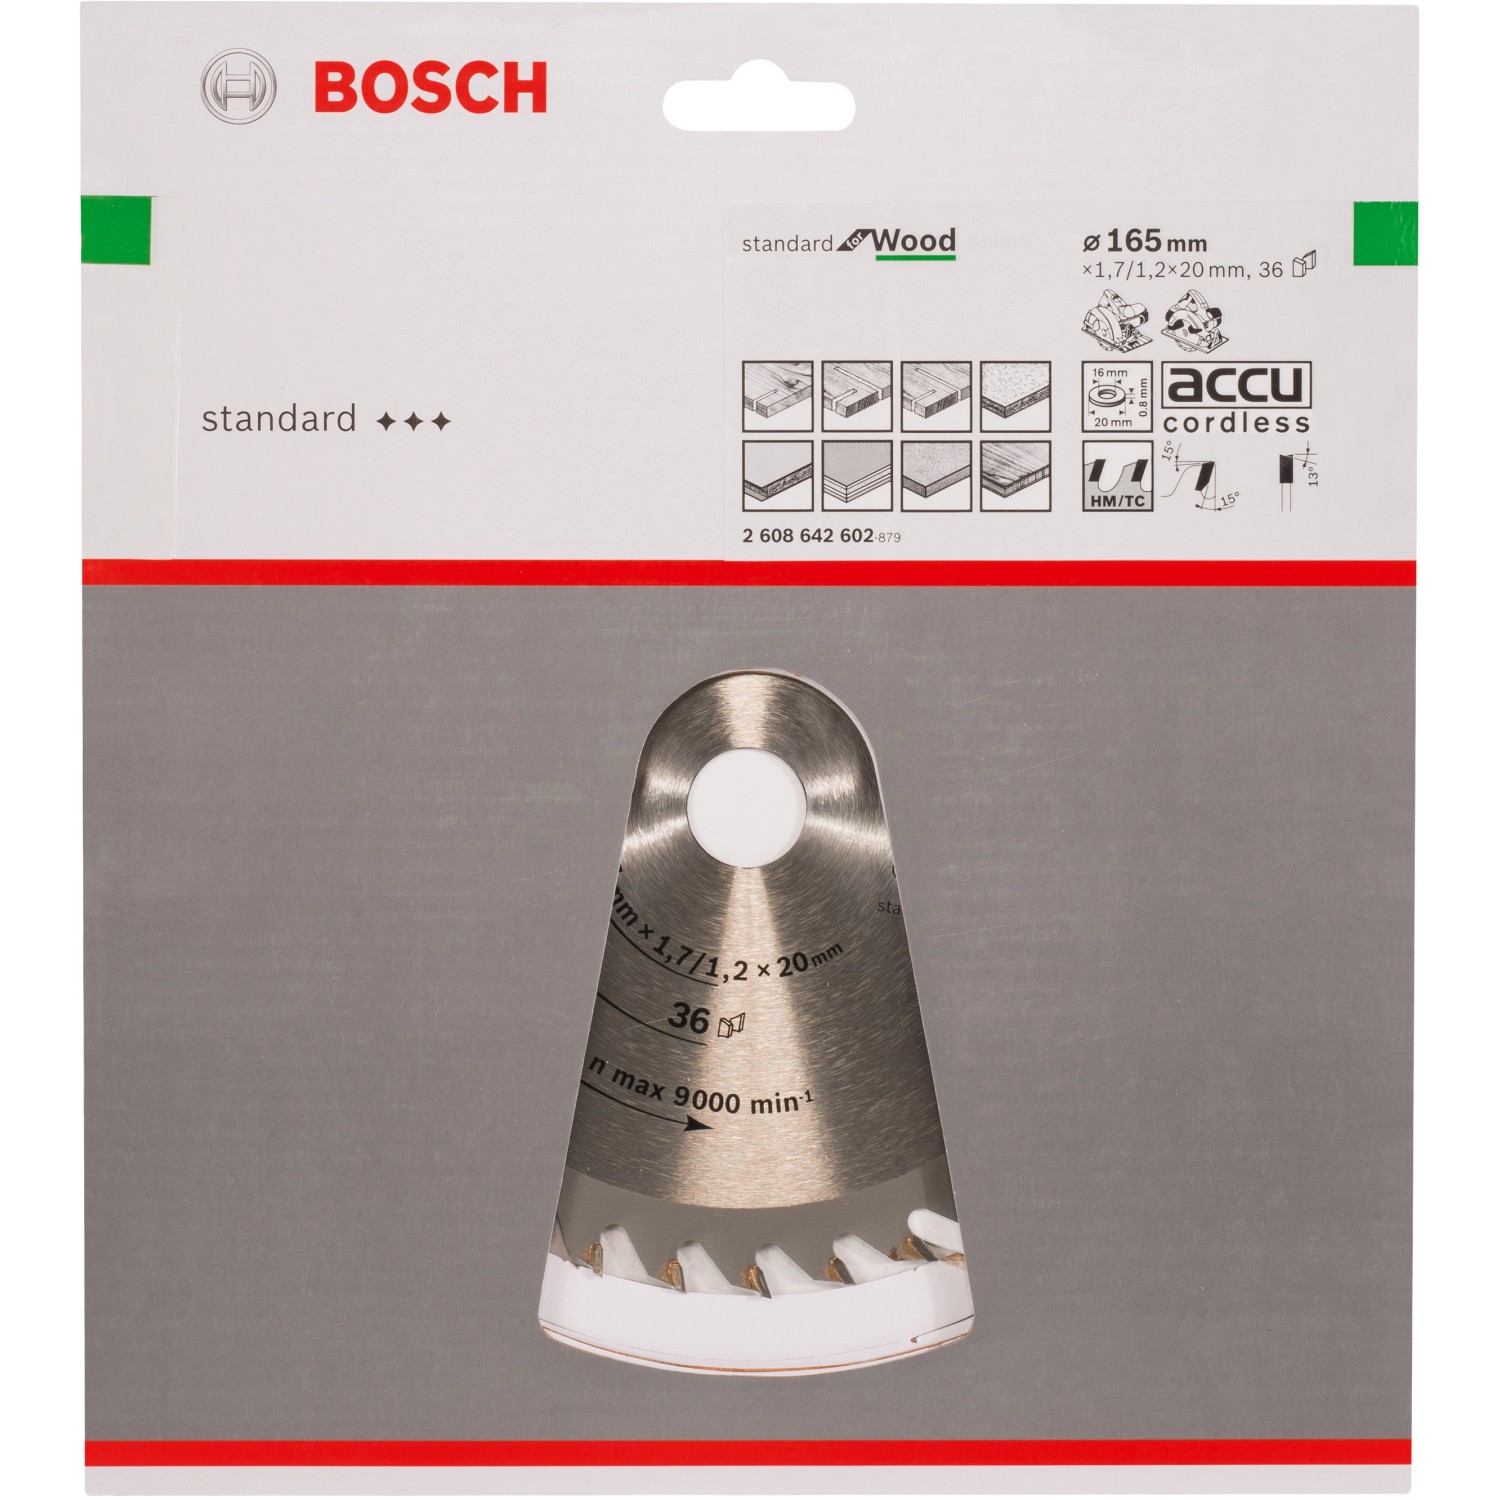 bei OBI Optiline kaufen Bosch Wood Kreissägeblatt